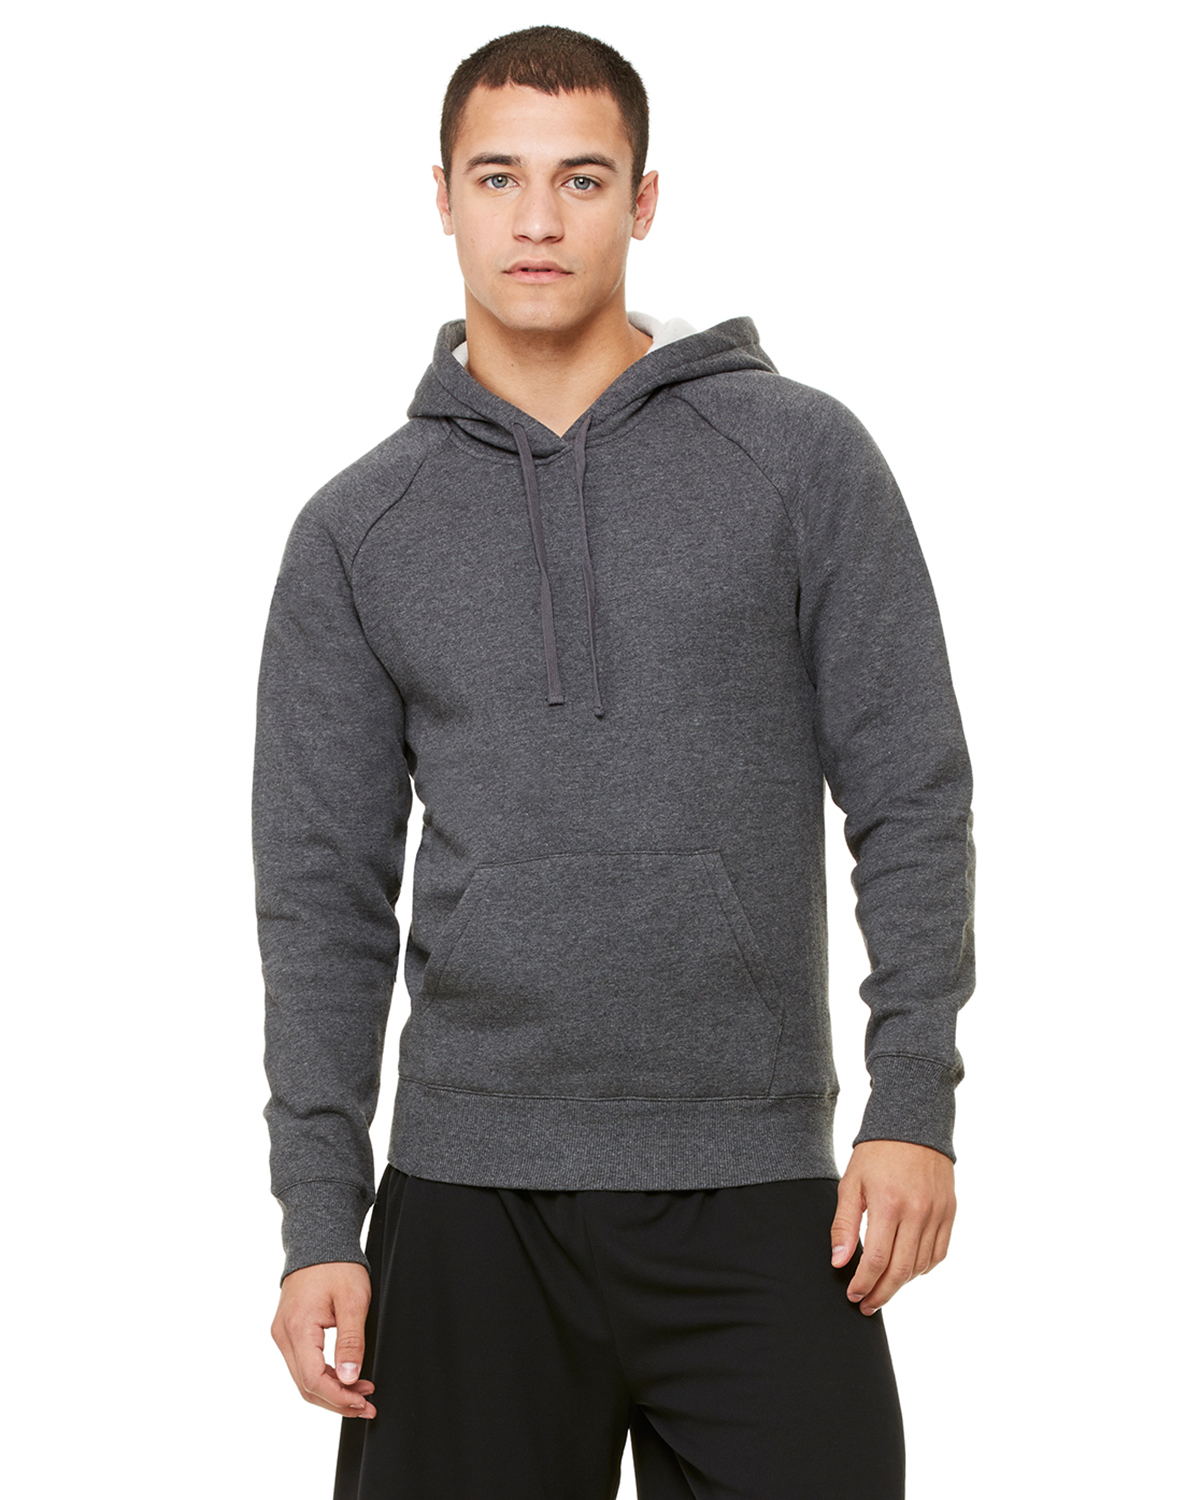 alo - Unisex Performance Fleece Hooded Pullover $23.01